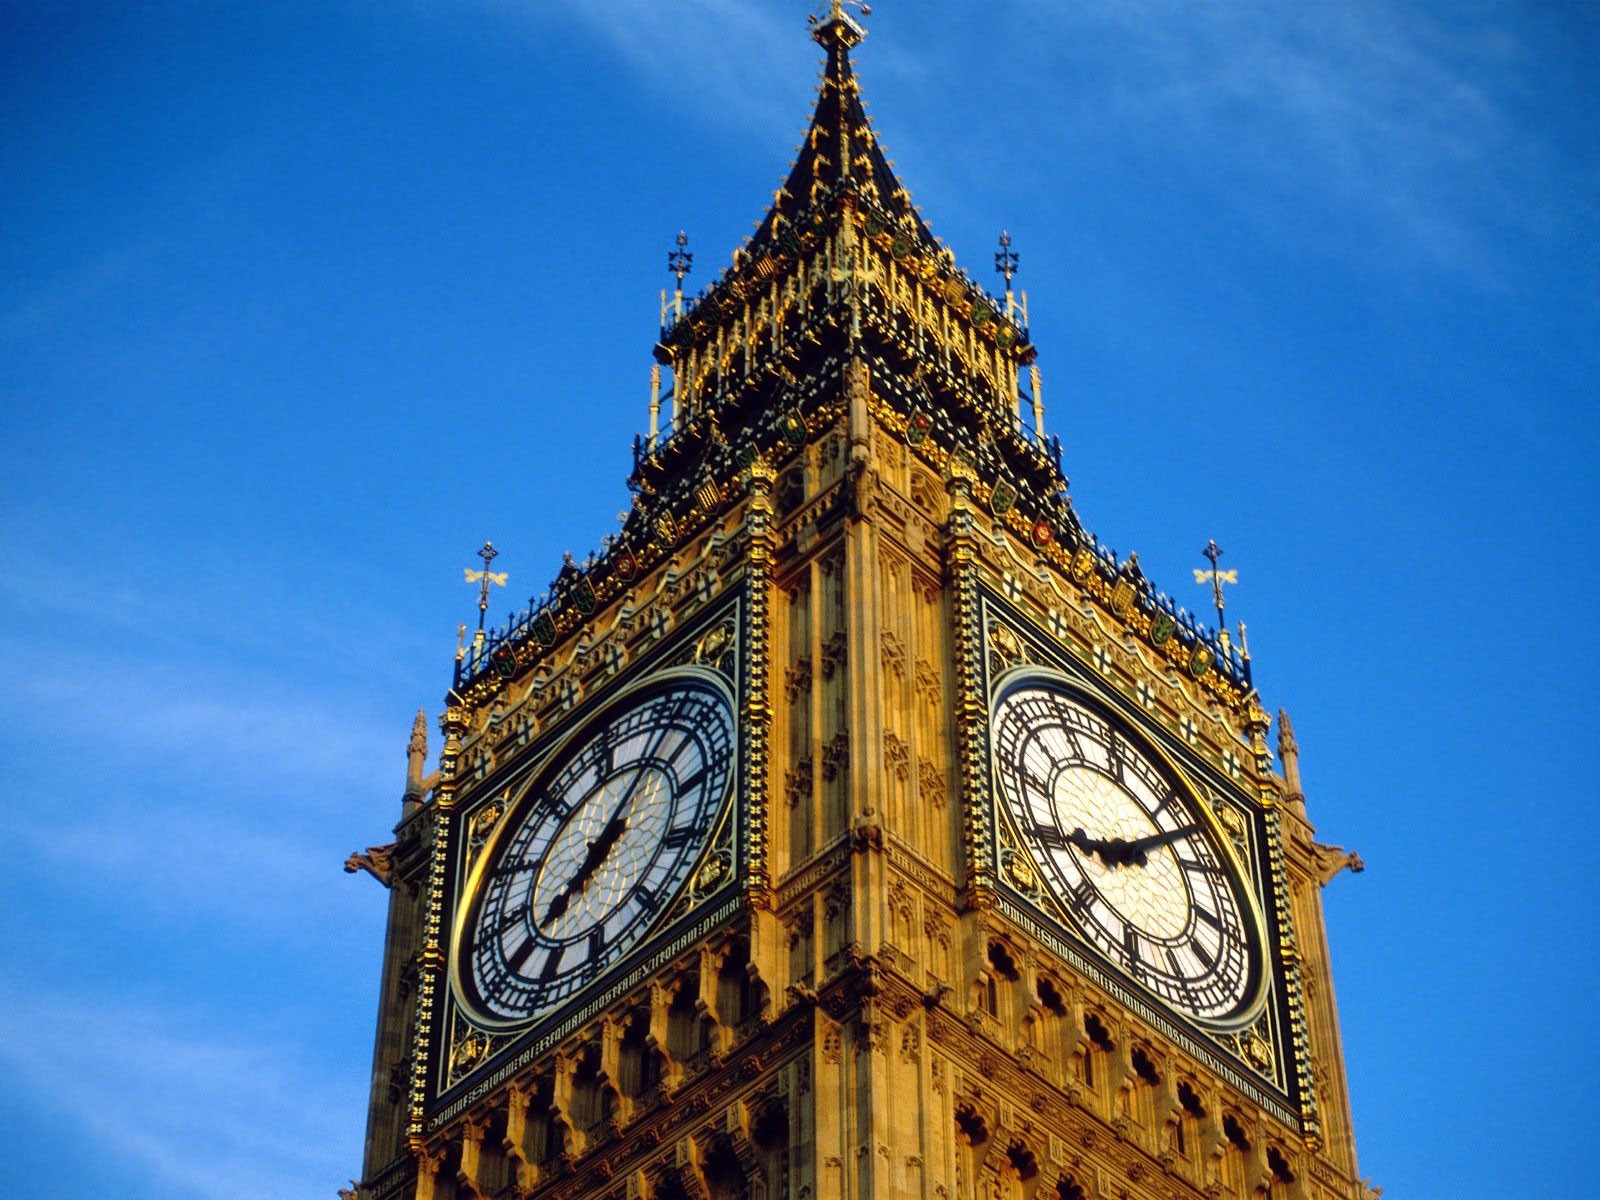 General 1600x1200 architecture Big Ben building London UK clocks landmark Europe clock tower